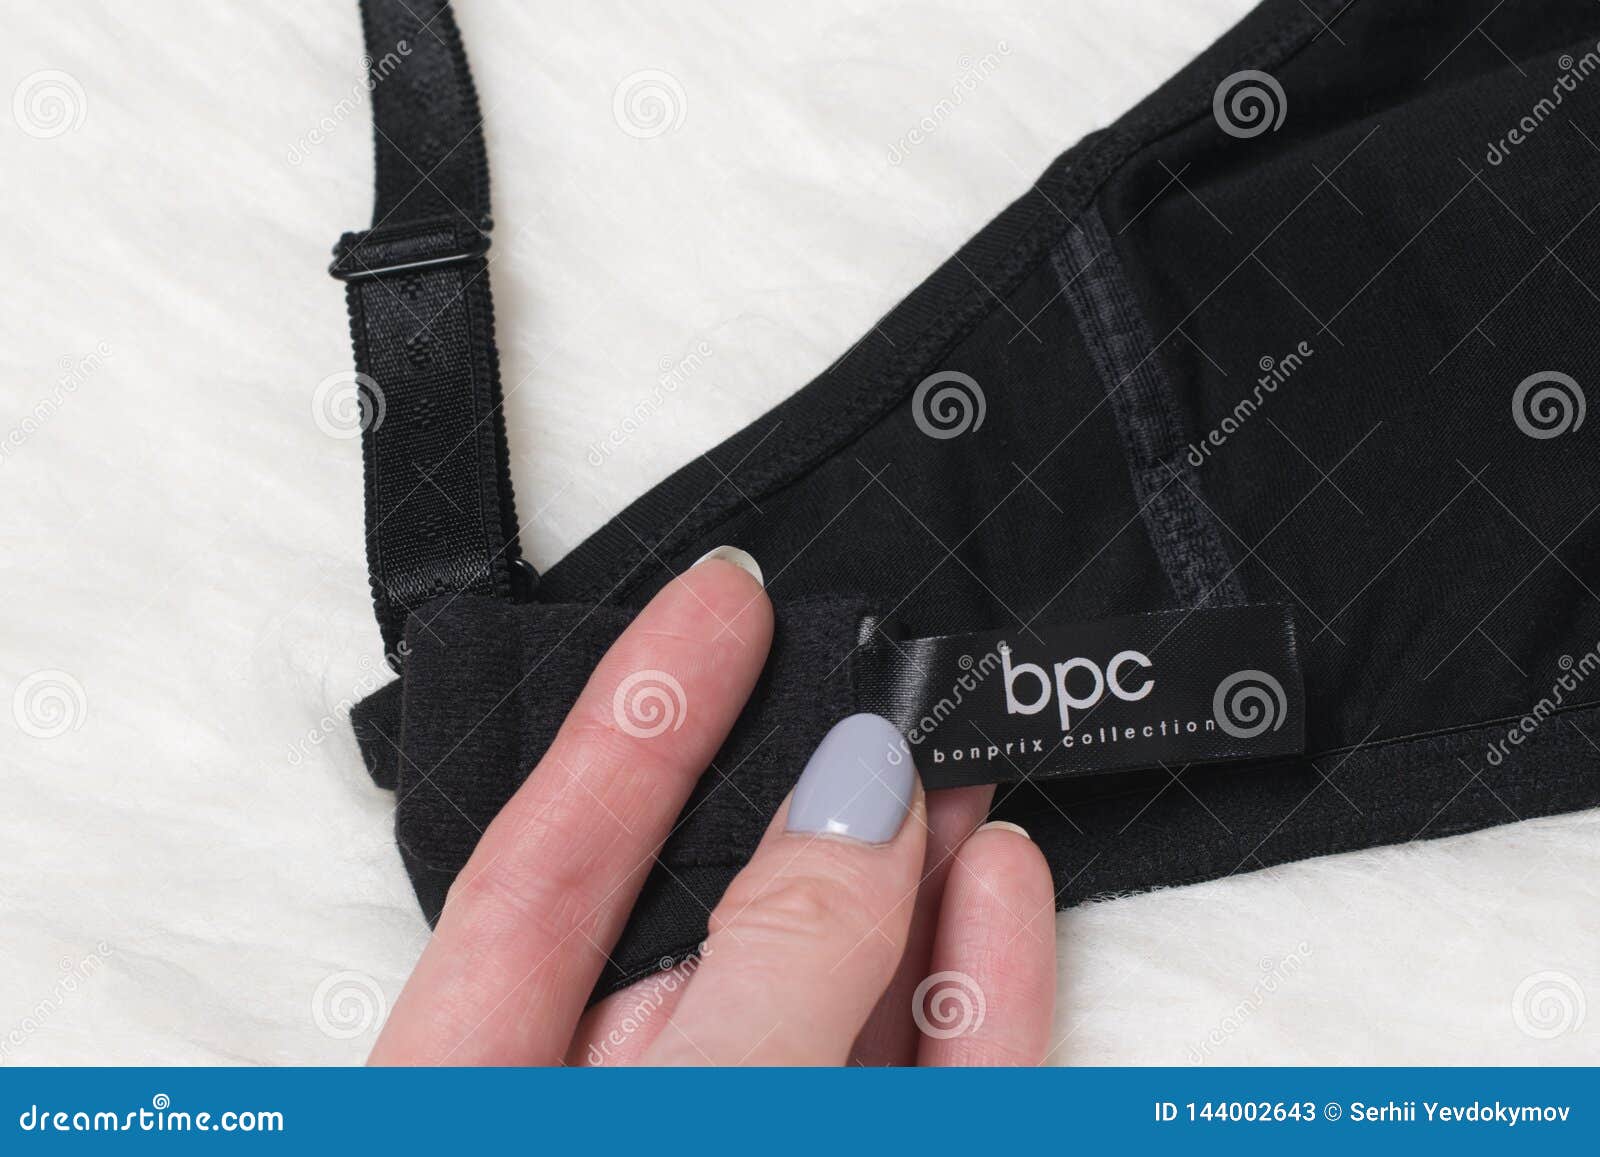 https://thumbs.dreamstime.com/z/kharkov-ukraine-march-label-bpc-bonprix-collection-black-cotton-bra-female-hand-fashion-lingerie-concept-kharkov-ukraine-144002643.jpg